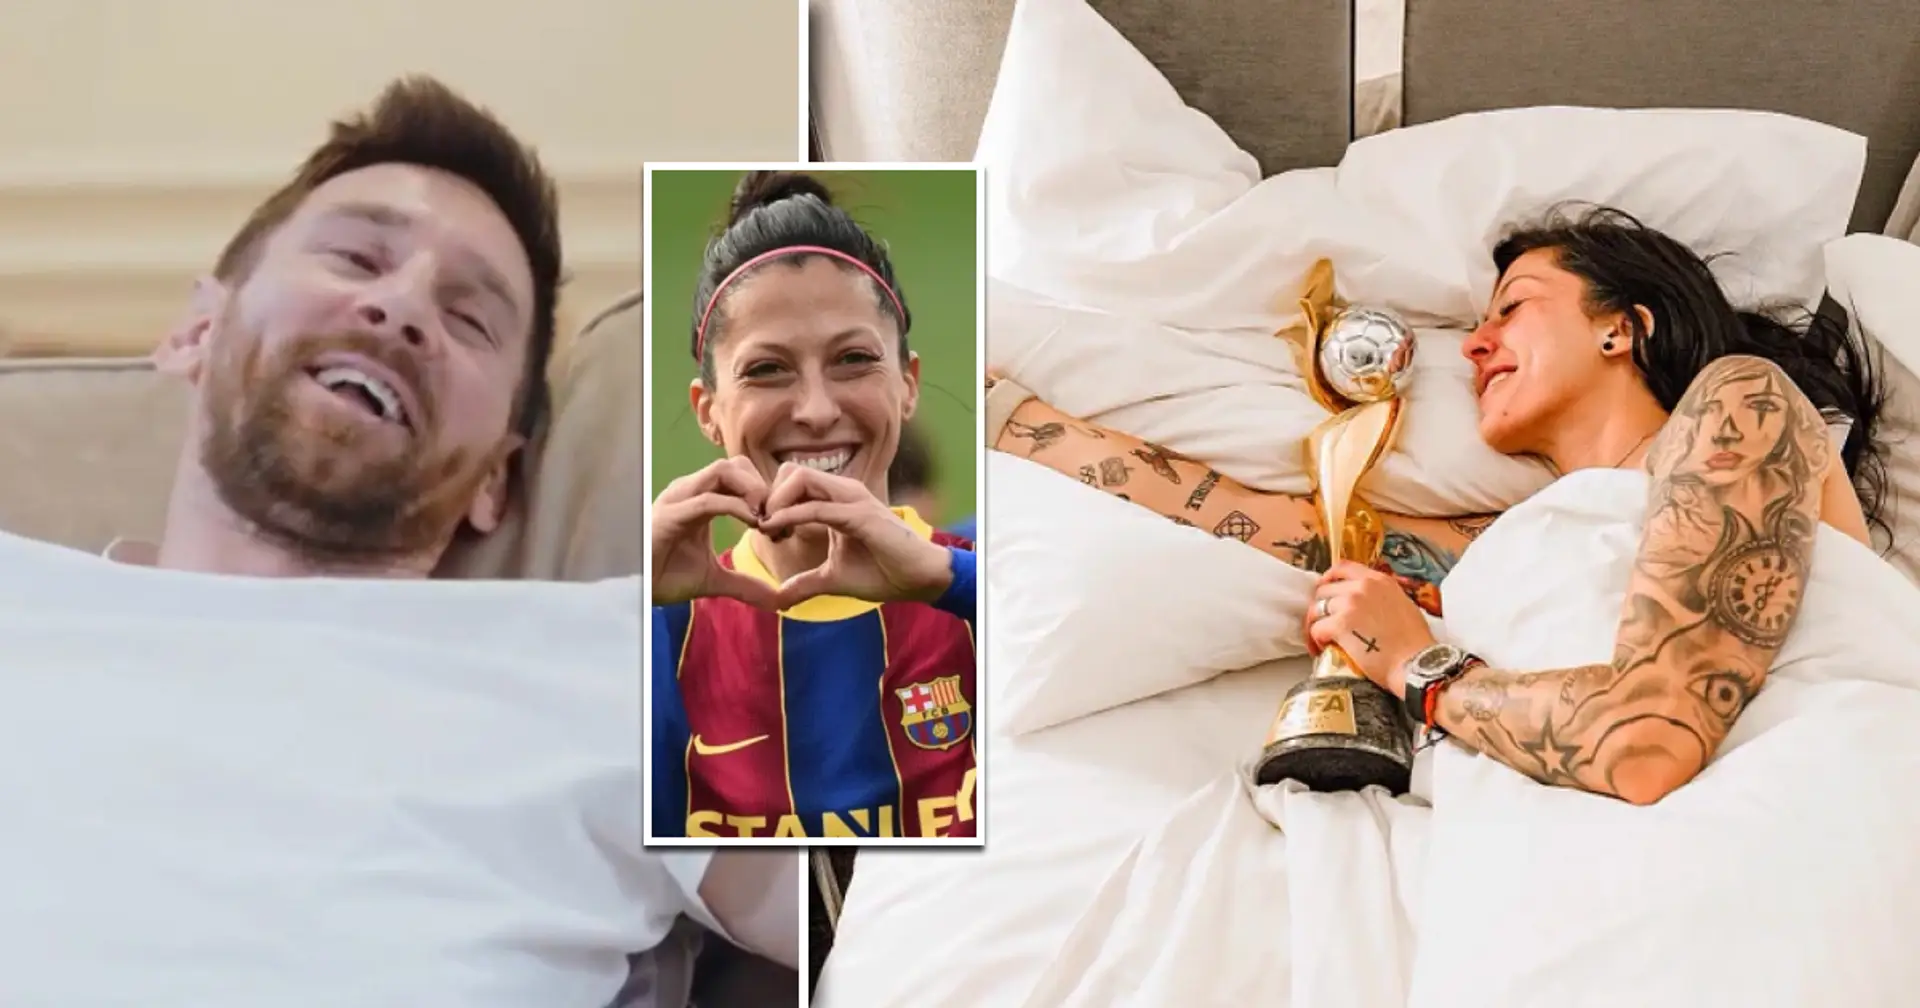 Barca Femeni legend Jenni Hermoso recreates iconic Leo Messi pic after World Cup triumph